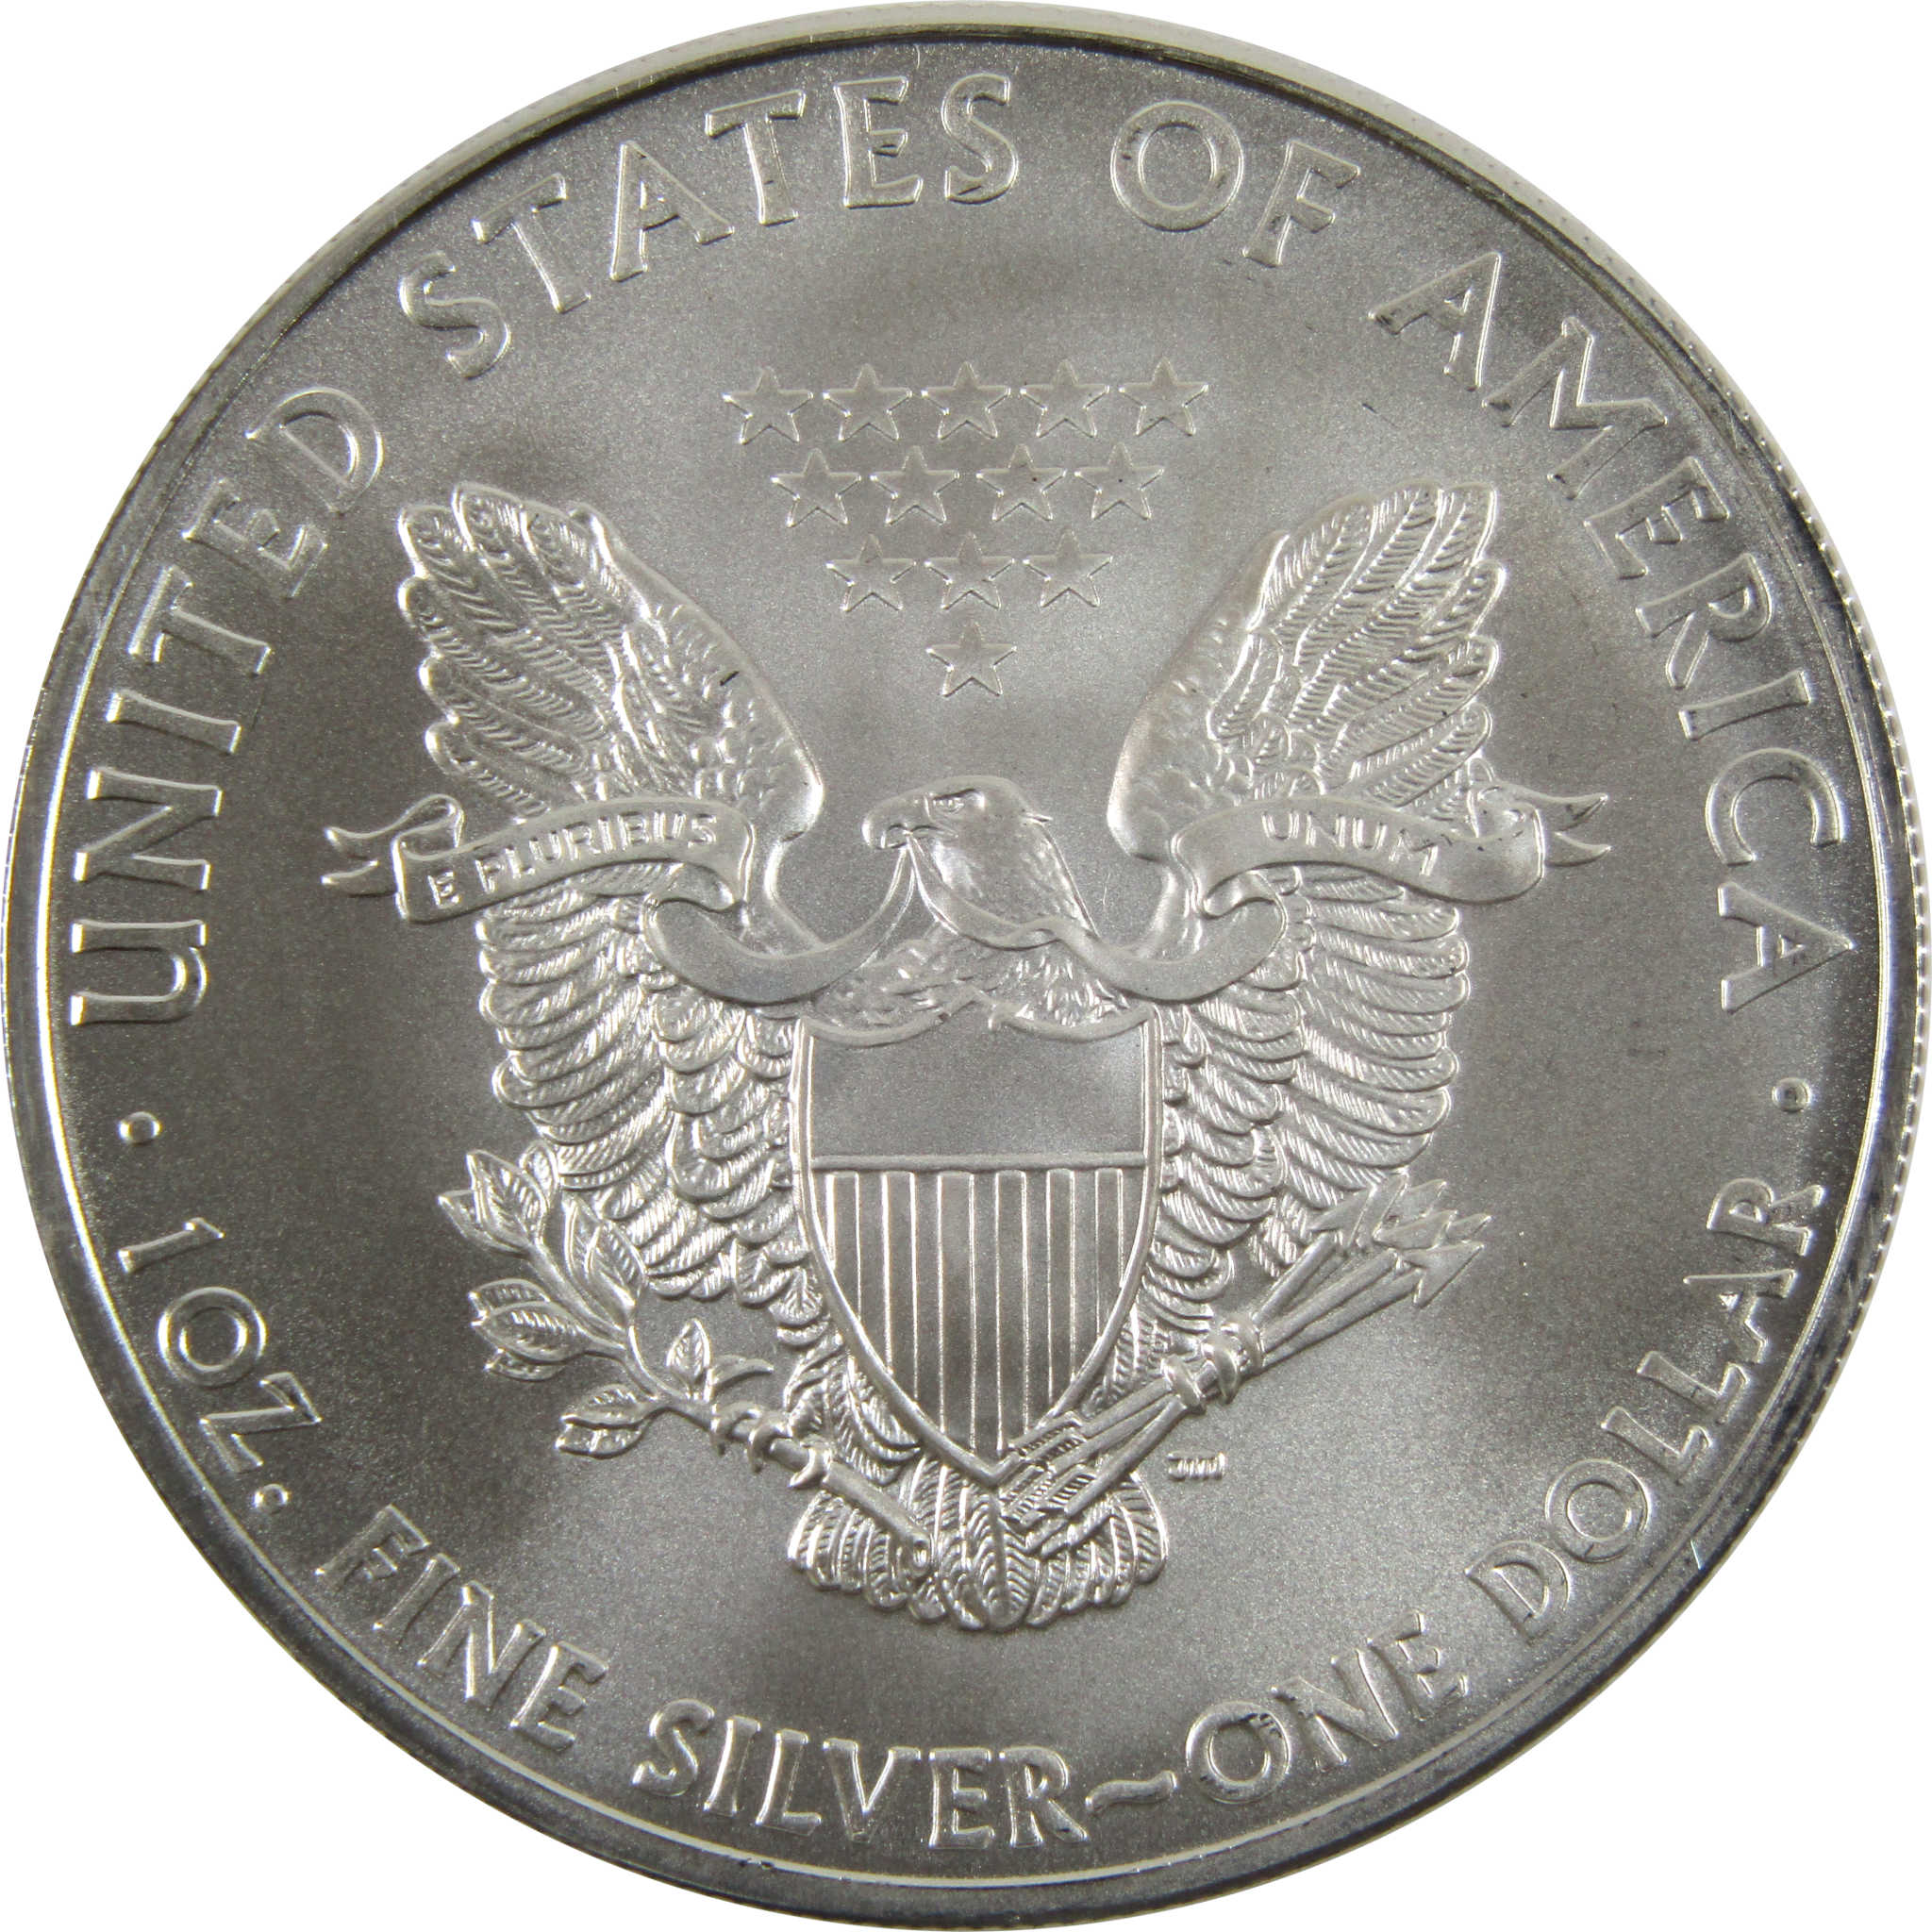 2009 American Eagle BU Uncirculated 1 oz .999 Silver Bullion $1 Coin